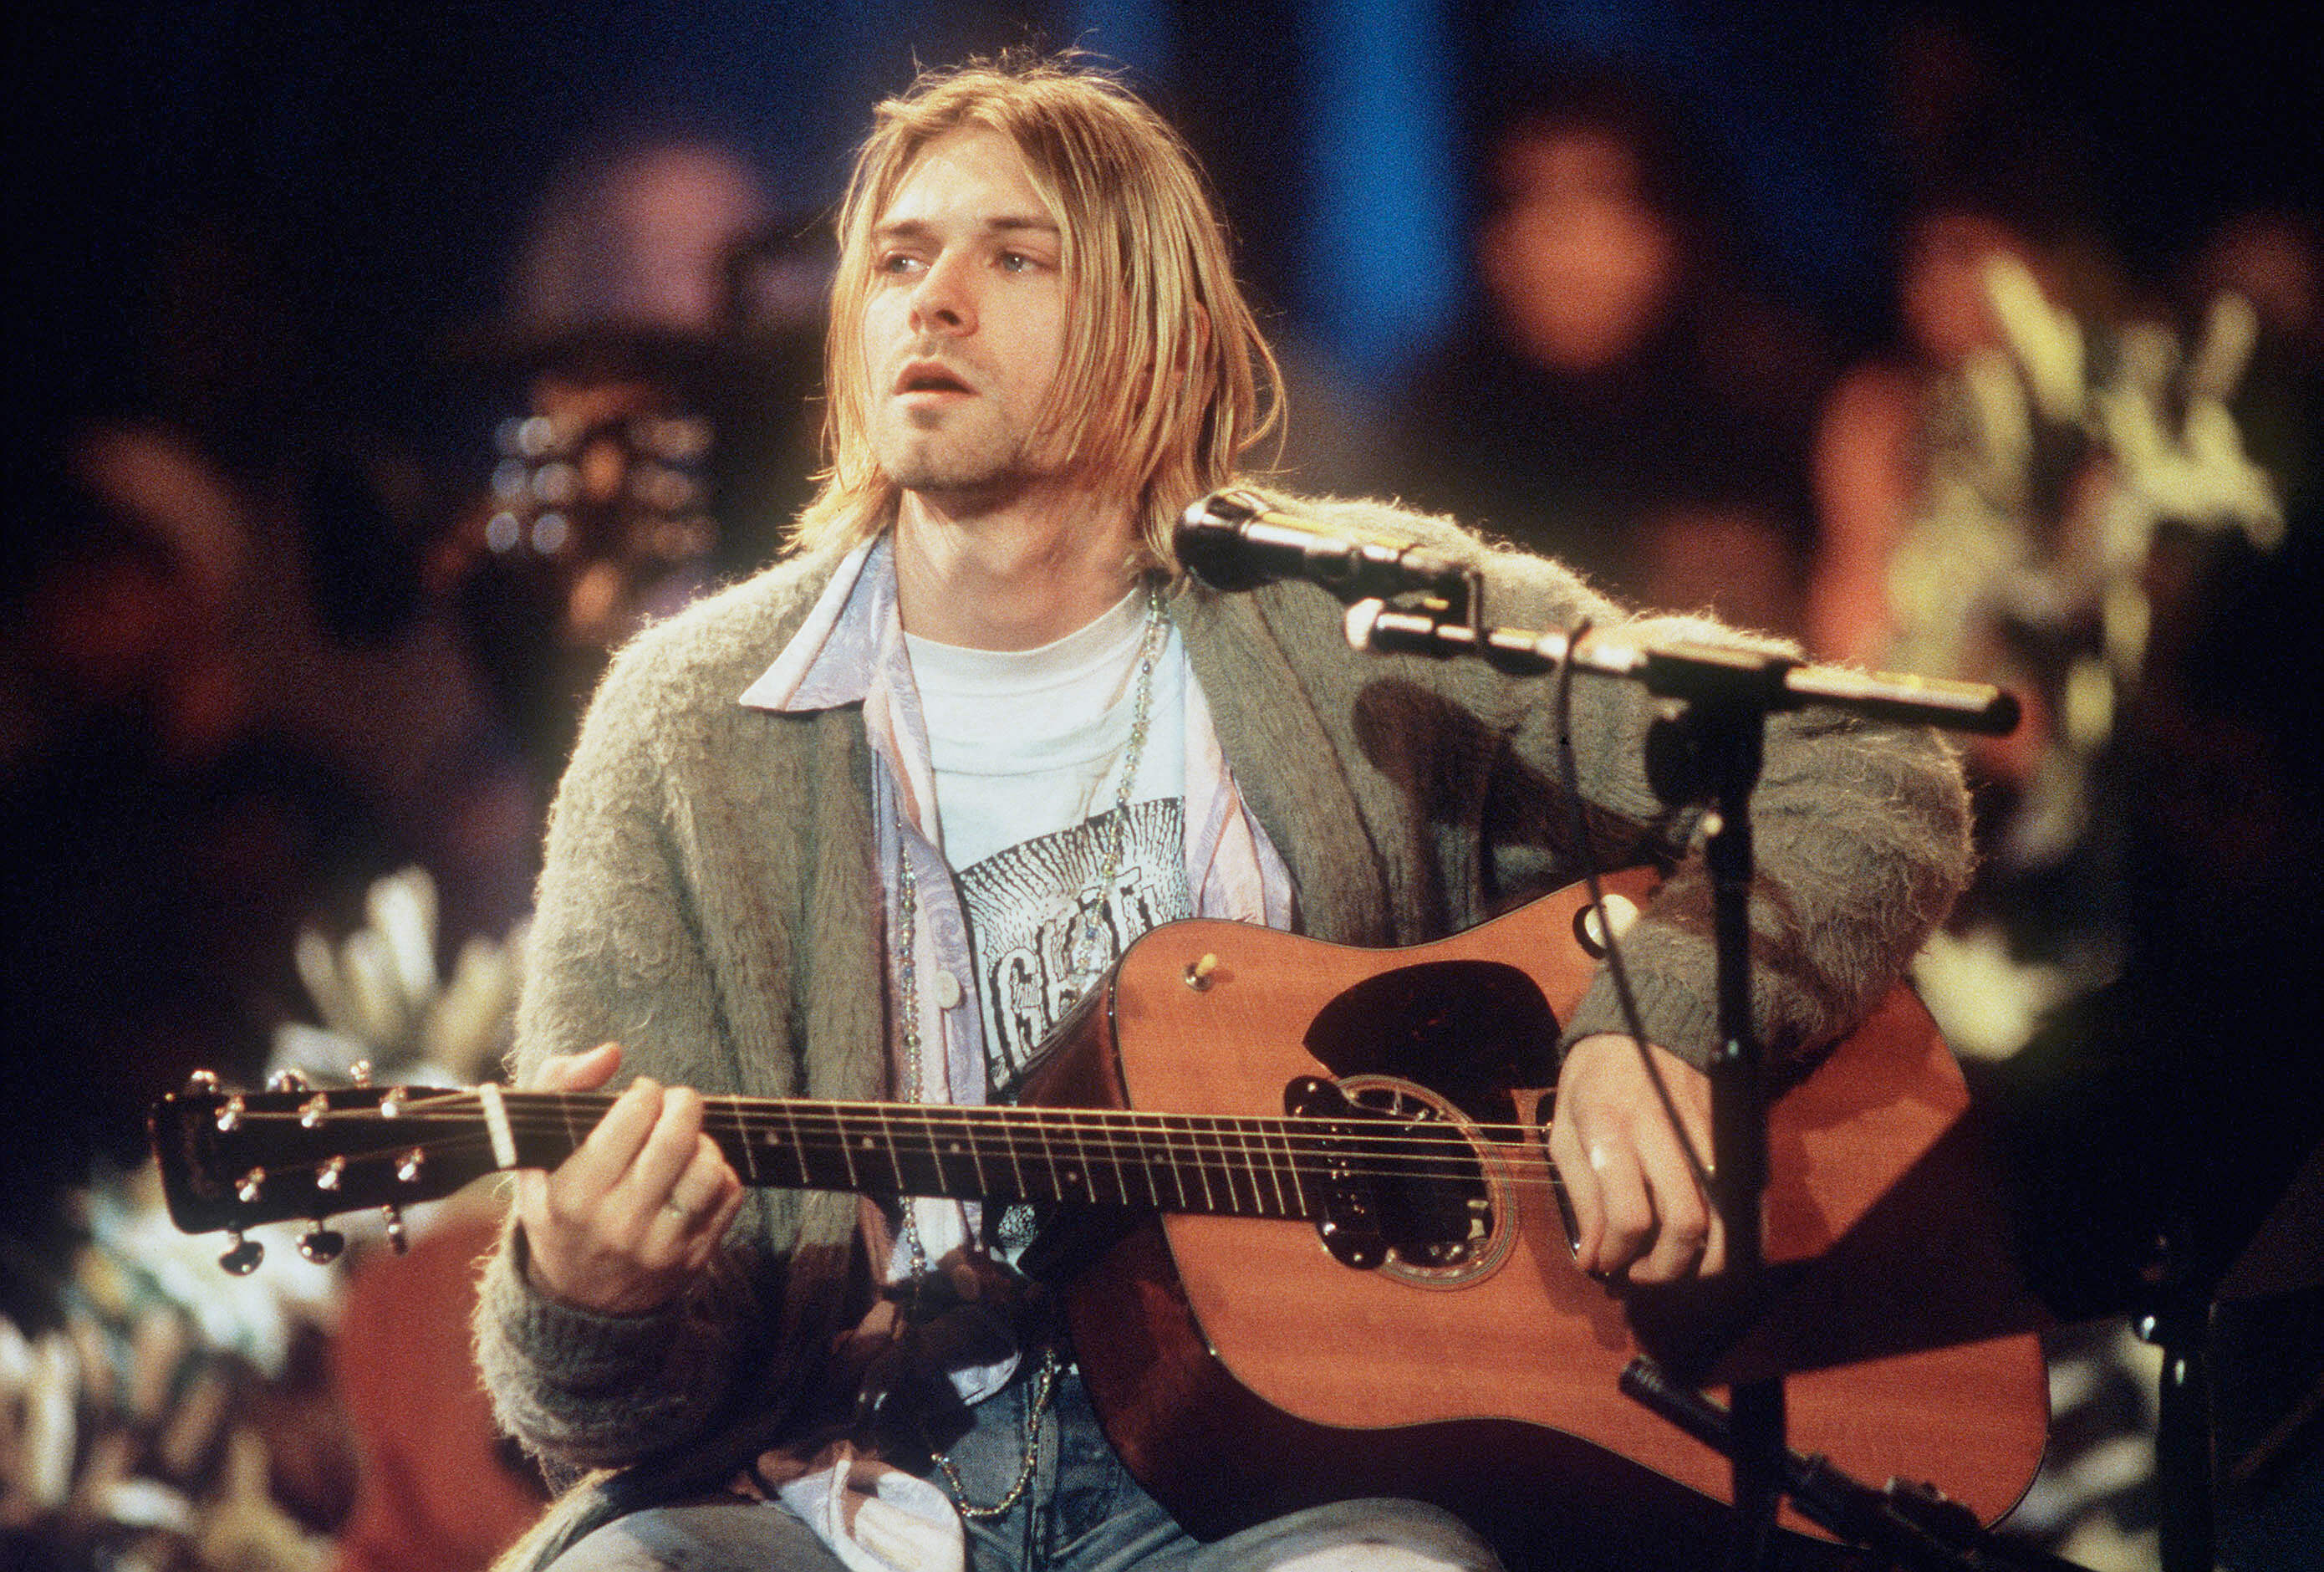 Kurt Cobain in a sweater during Nirvana's "Smells Like Teen Spirit"era